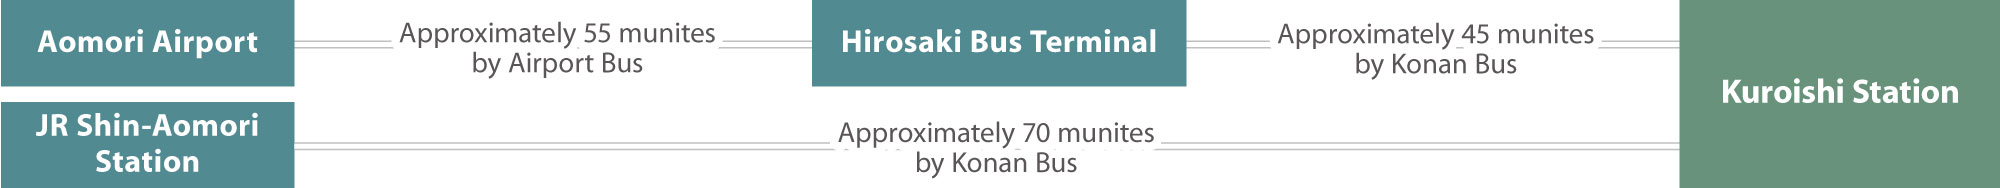 to kuroishi by bus